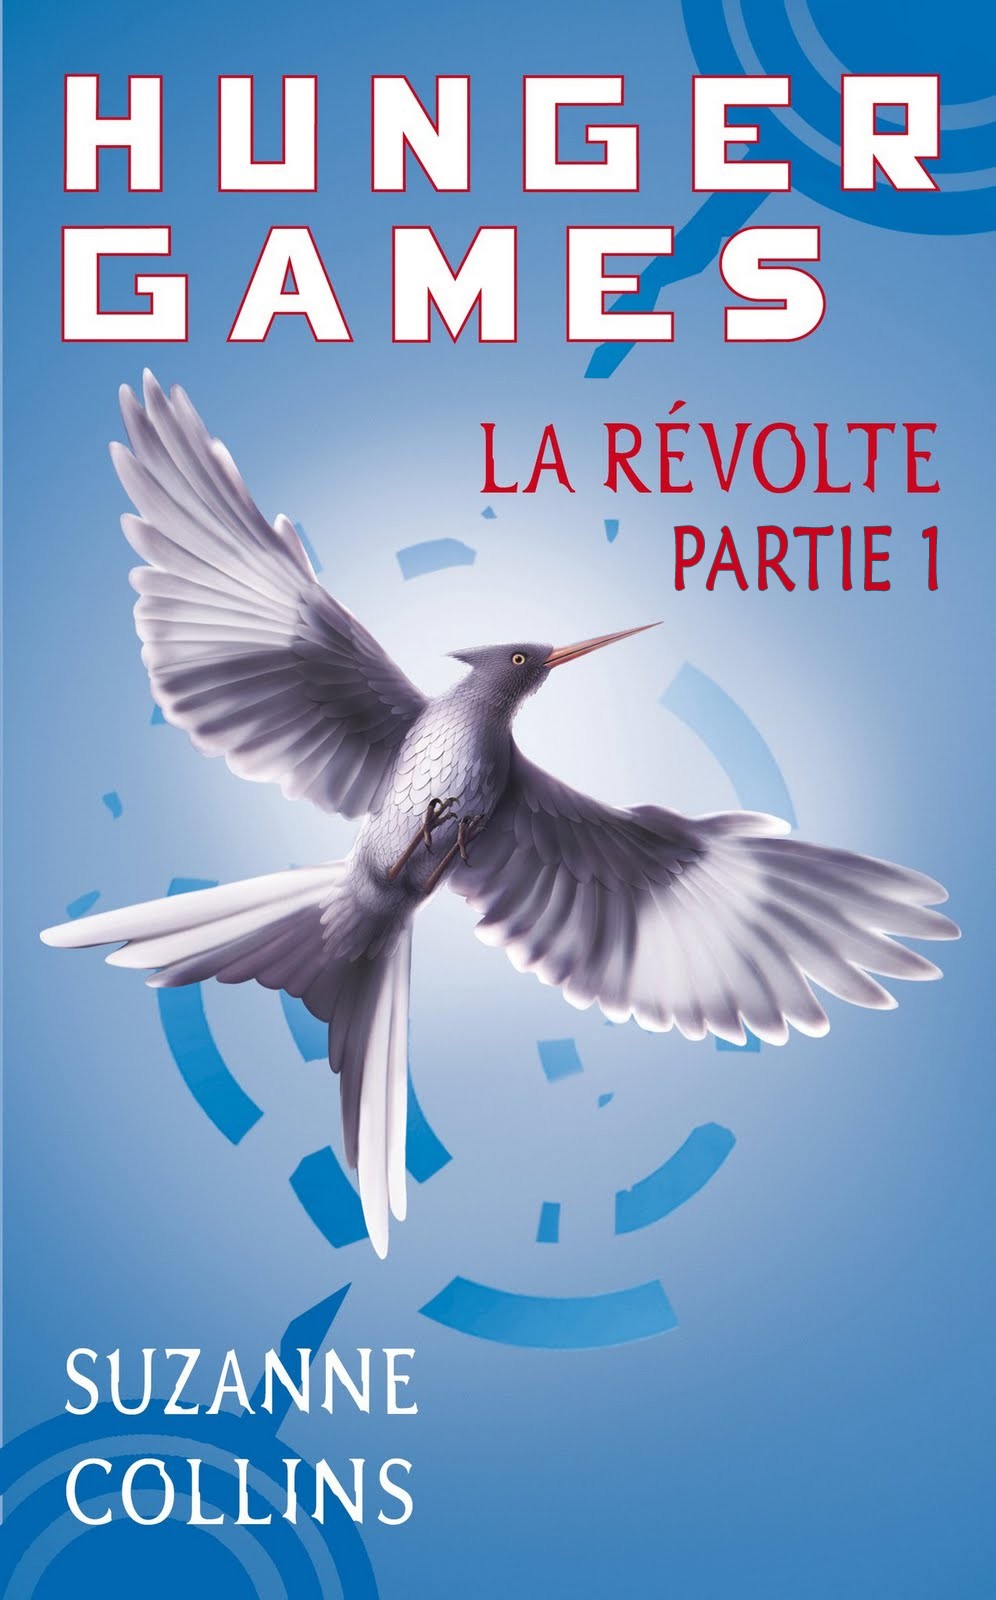 2015 Hunger Games Epub 3 La Revolte